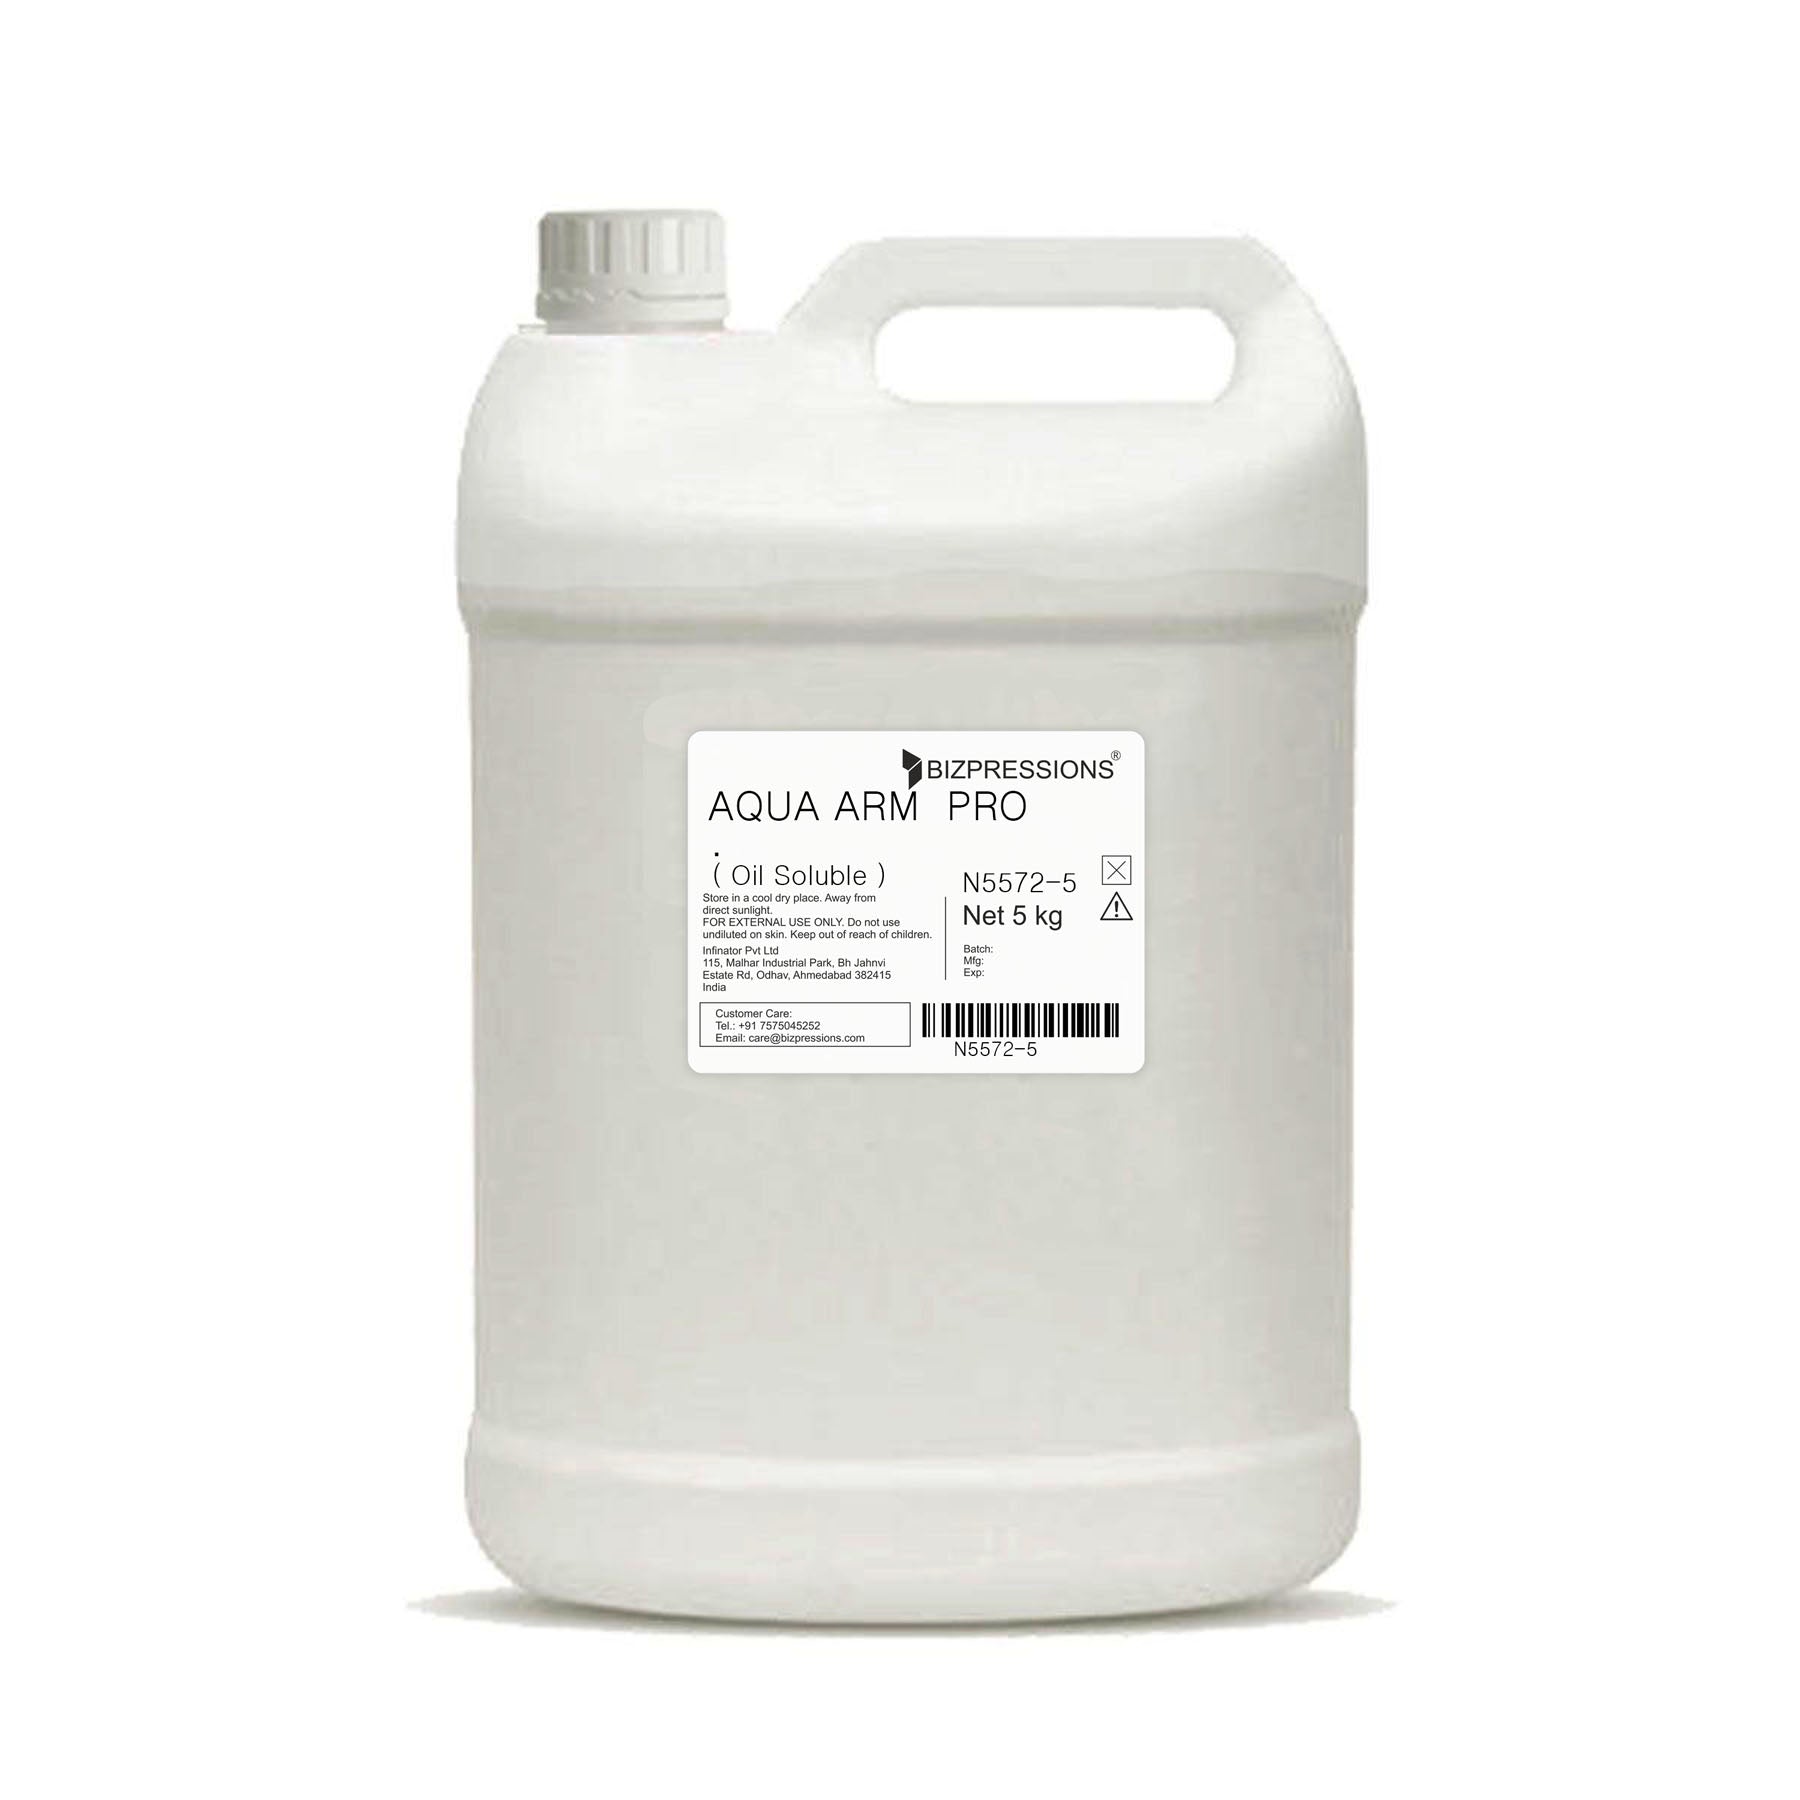 AQUA ARM PRO - Fragrance ( Oil Soluble ) - 5 kg